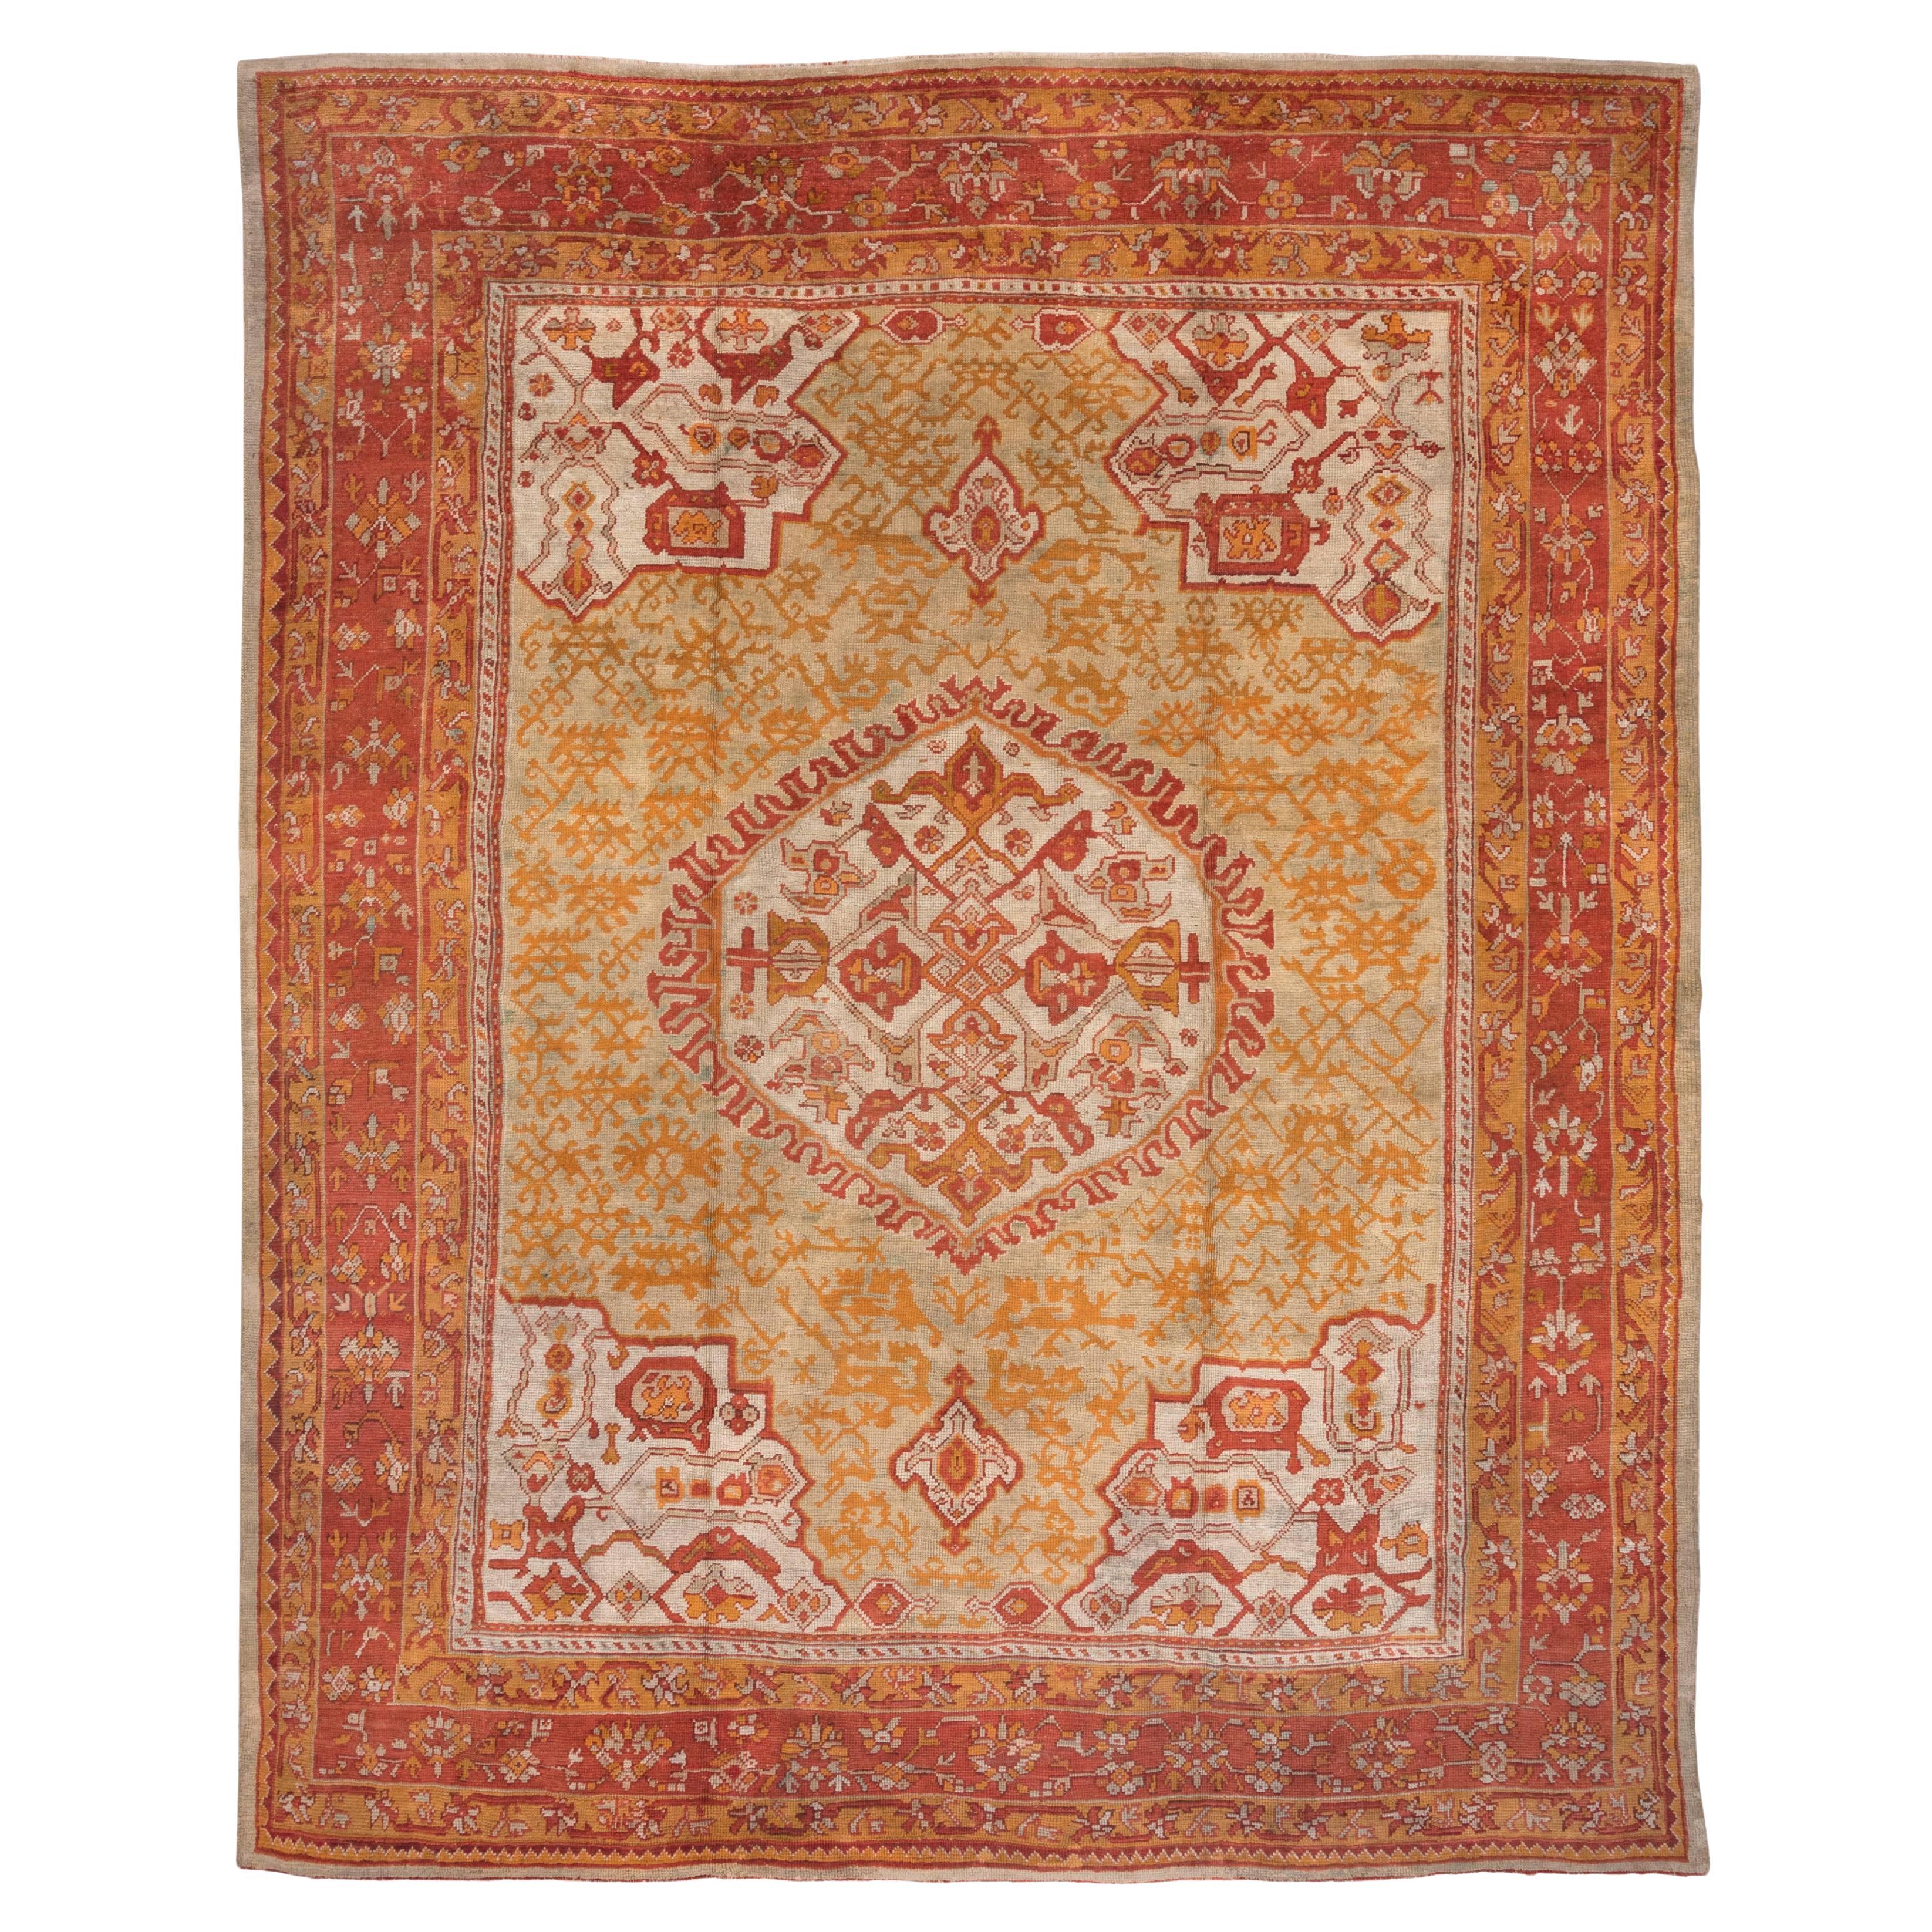 Antique Turkish Oushak Carpet, Yellow Field